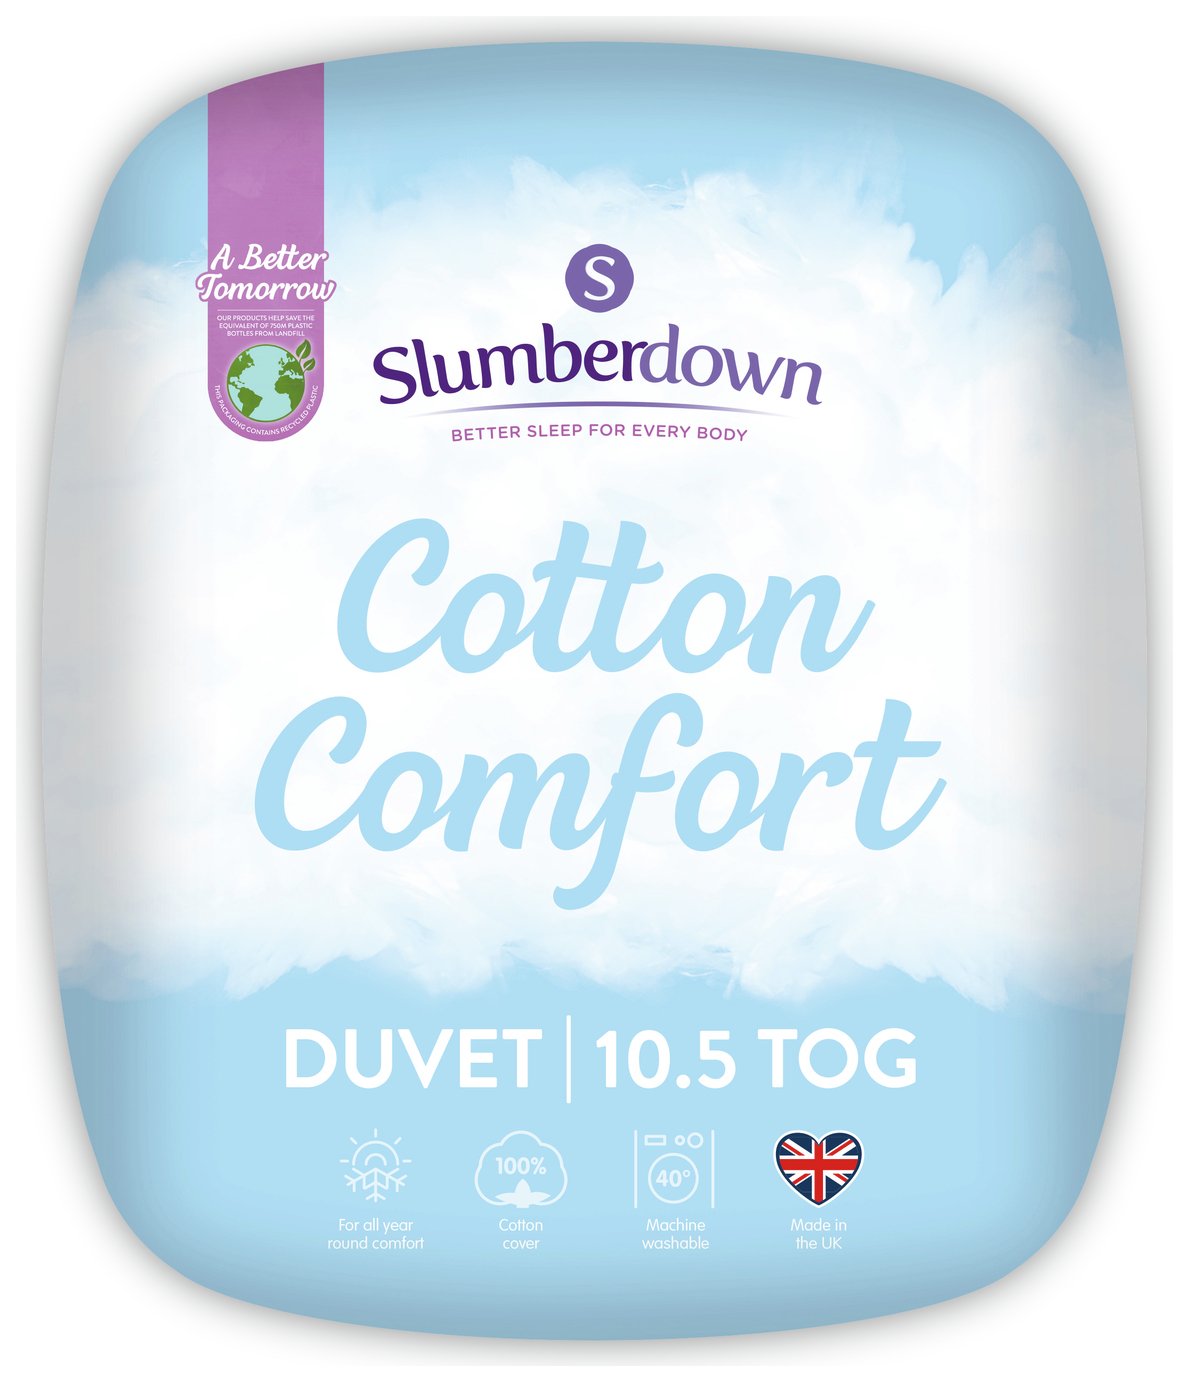 Slumberdown Cotton Comfort 10.5 Tog Duvet - Superking